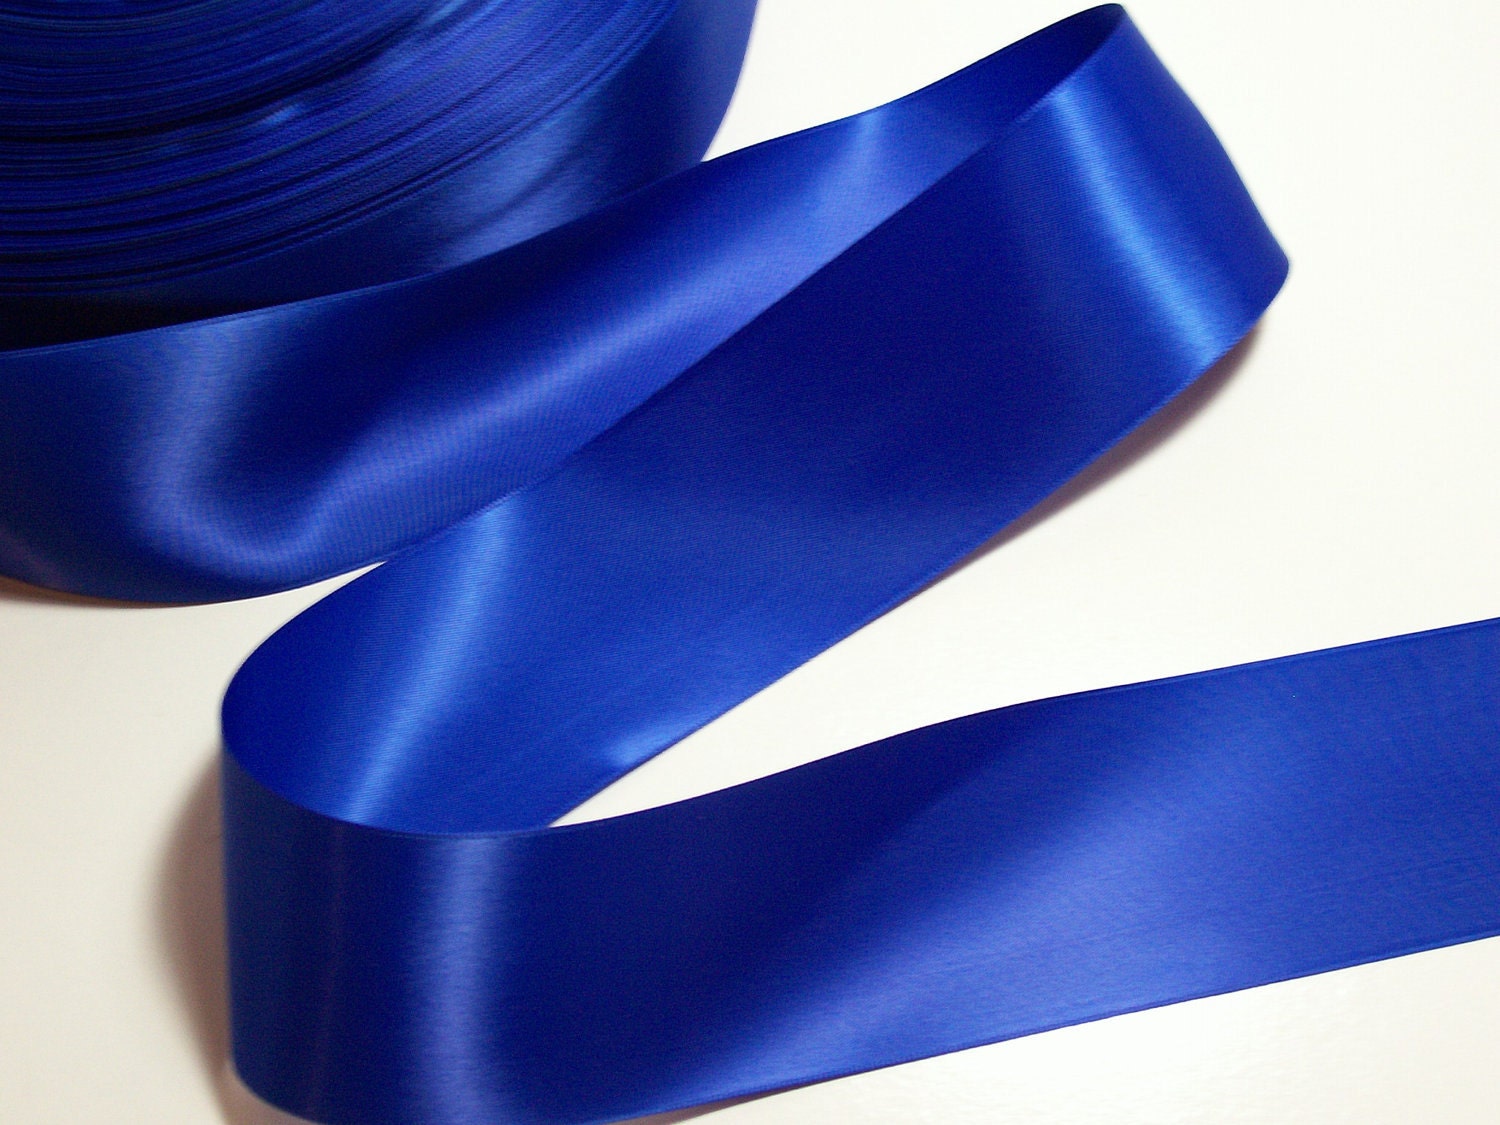 Royal Blue Ribbon Sapphire Blue Grosgrain Ribbon 5/8 inch wide x 10 yards